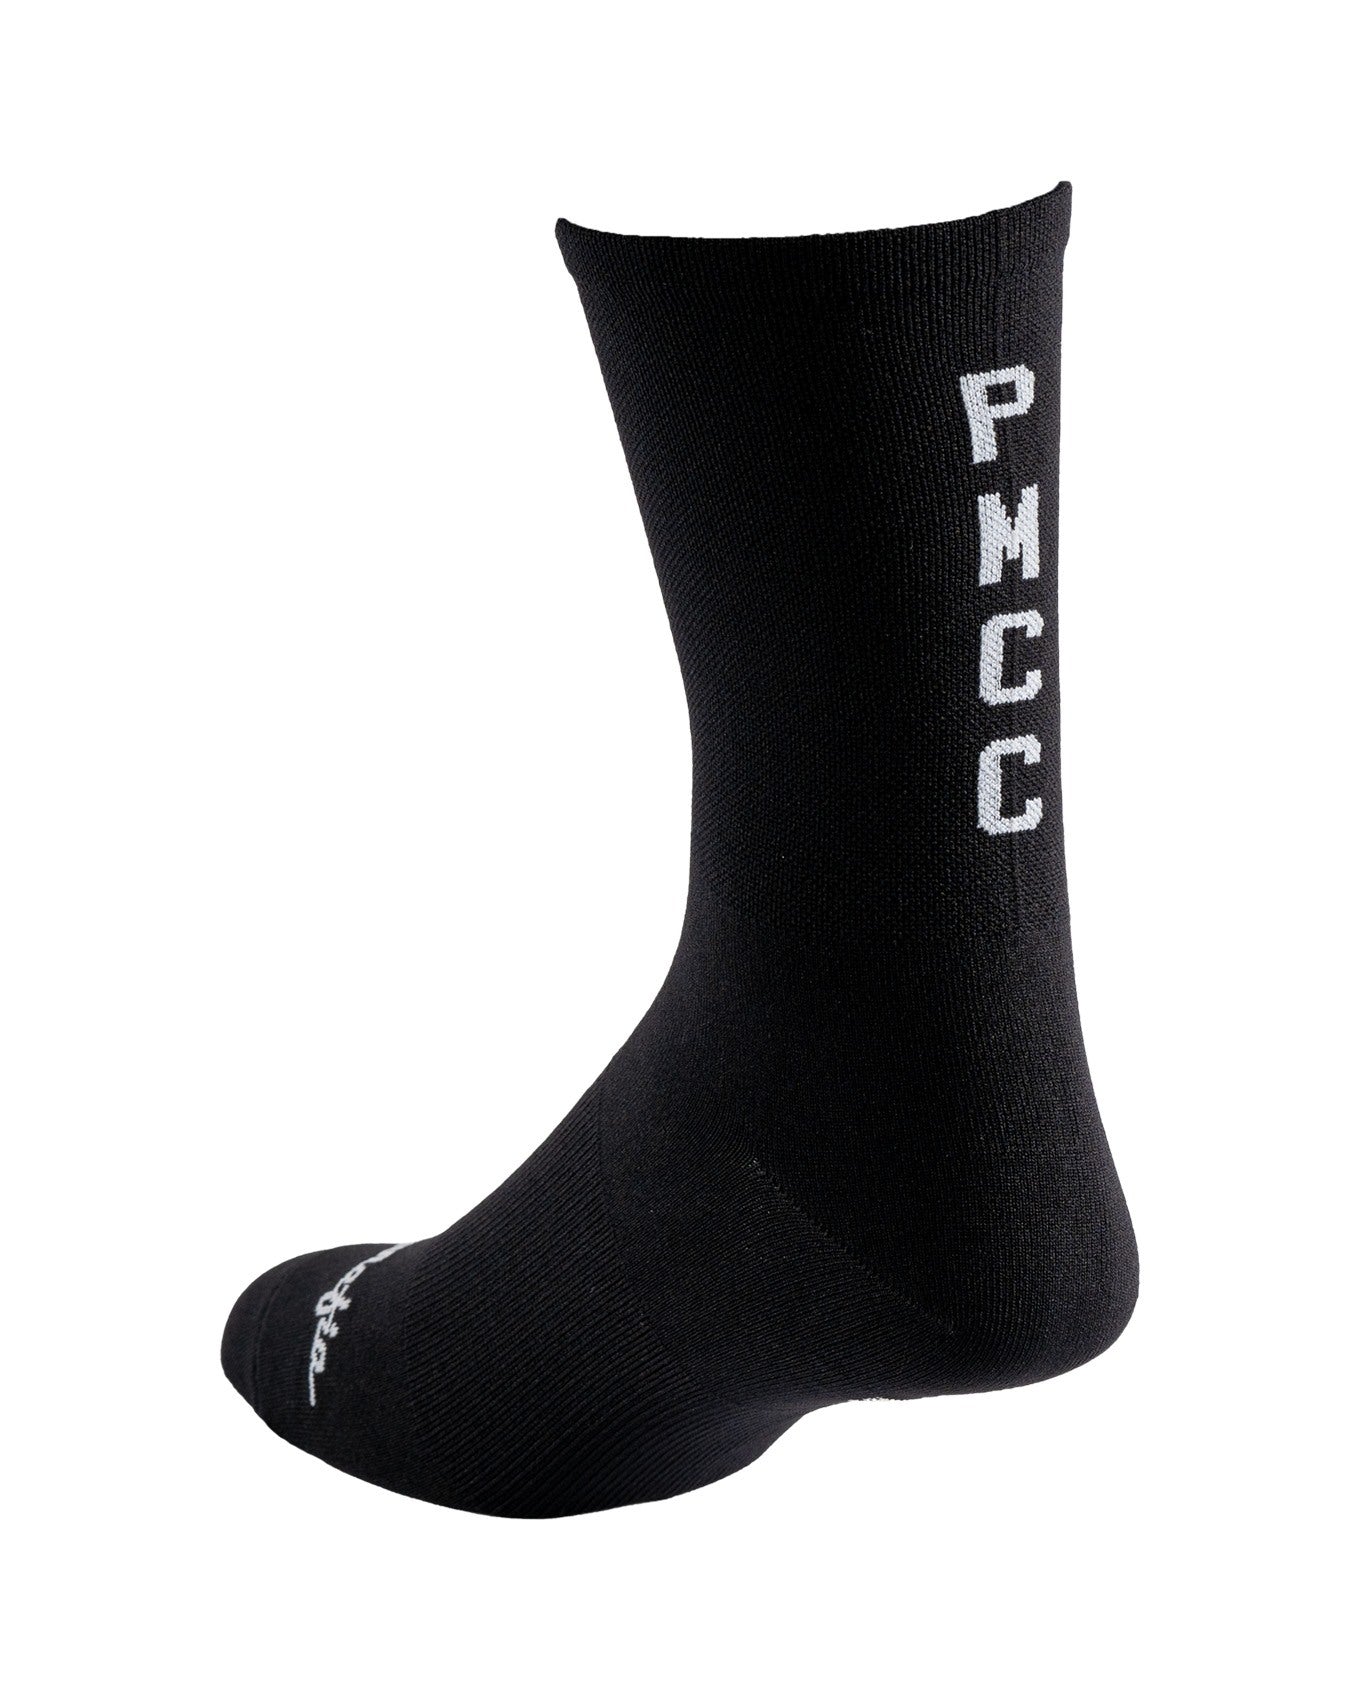 PMCC Socks